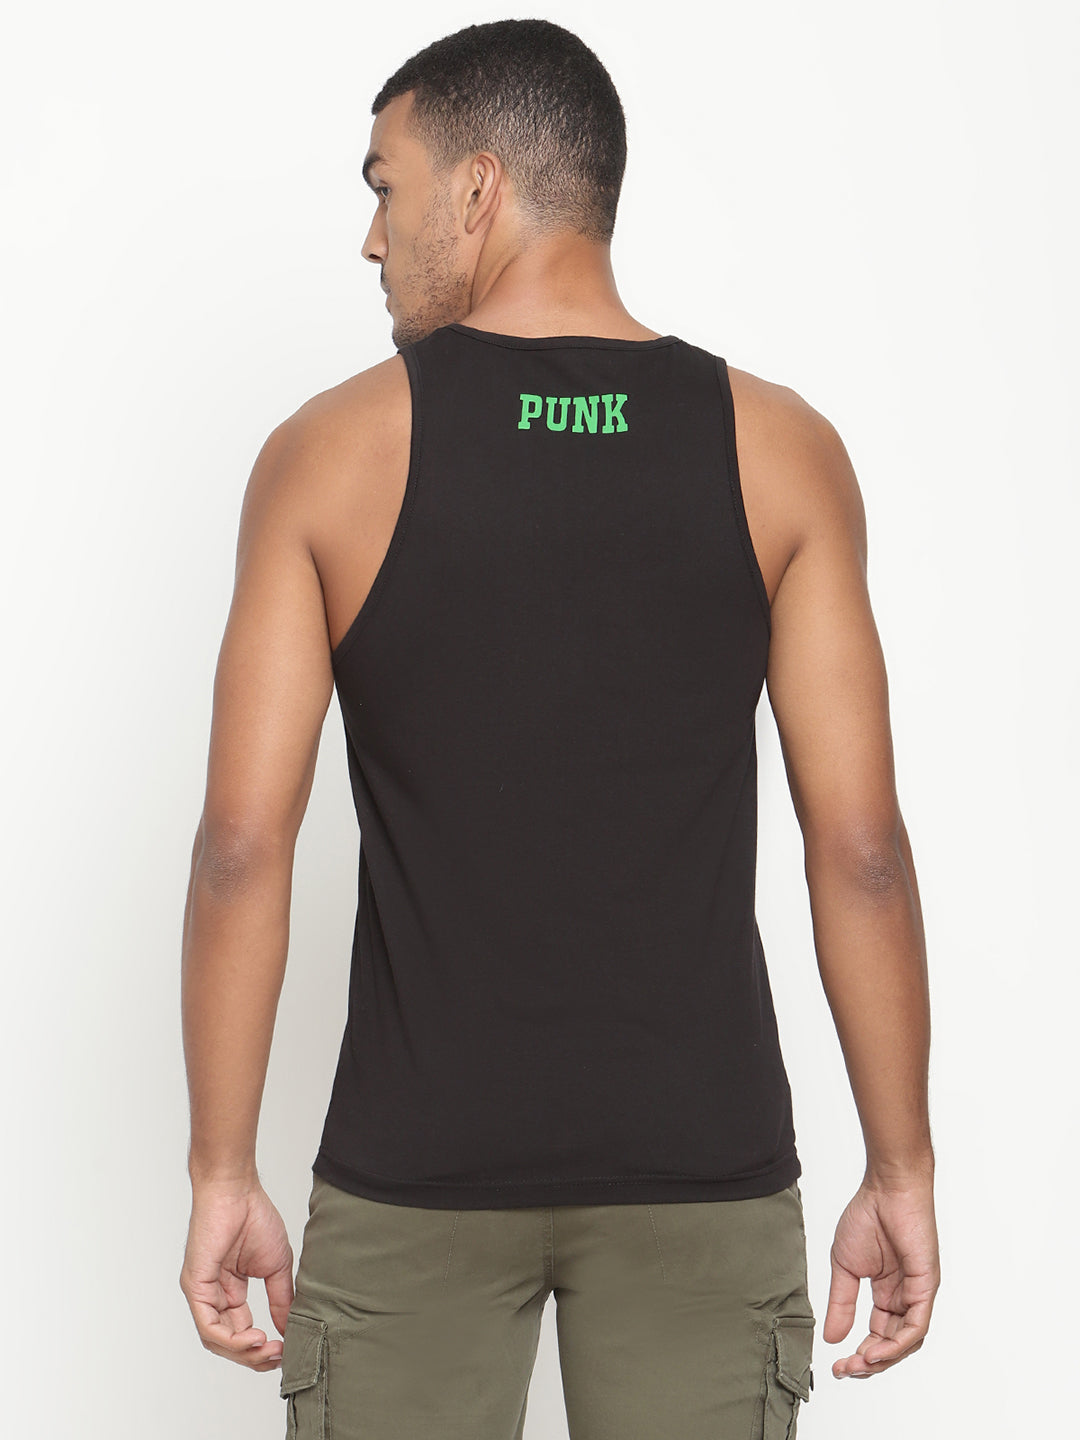 PSY-NEO Black Punk Sleevless T-shirt